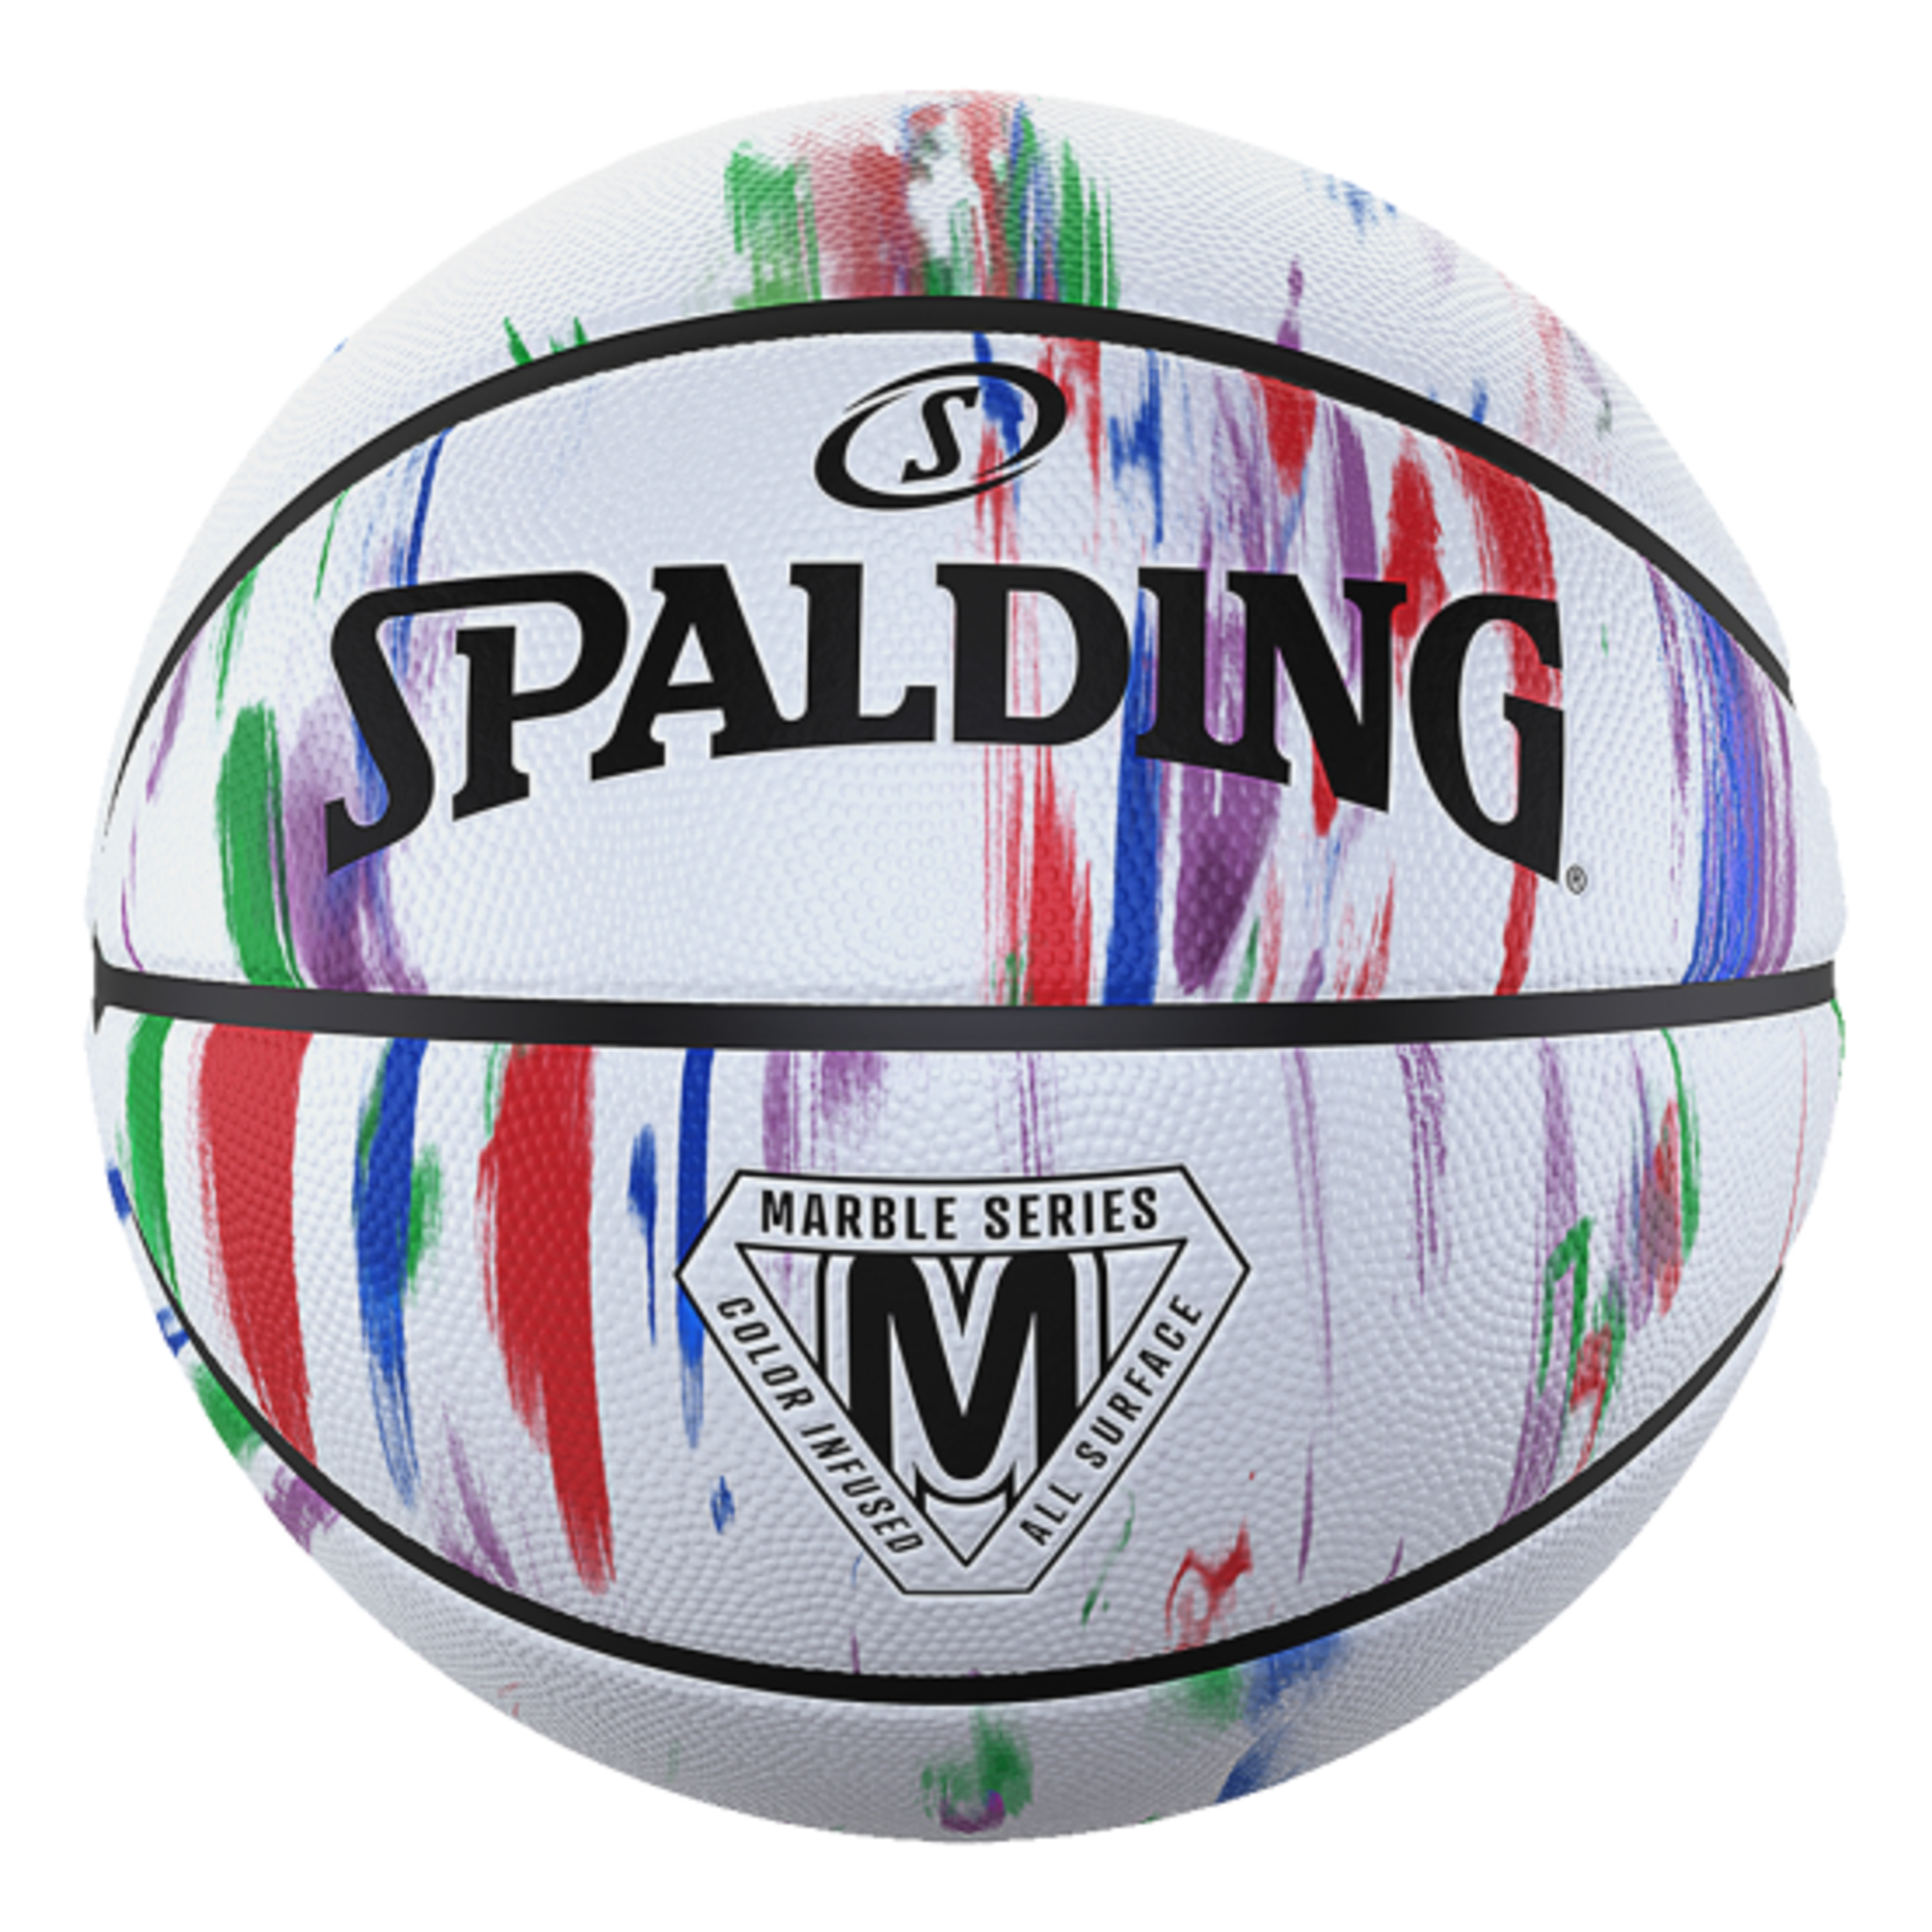 Basquetebol Spalding Marble Series Rainbow Sz7